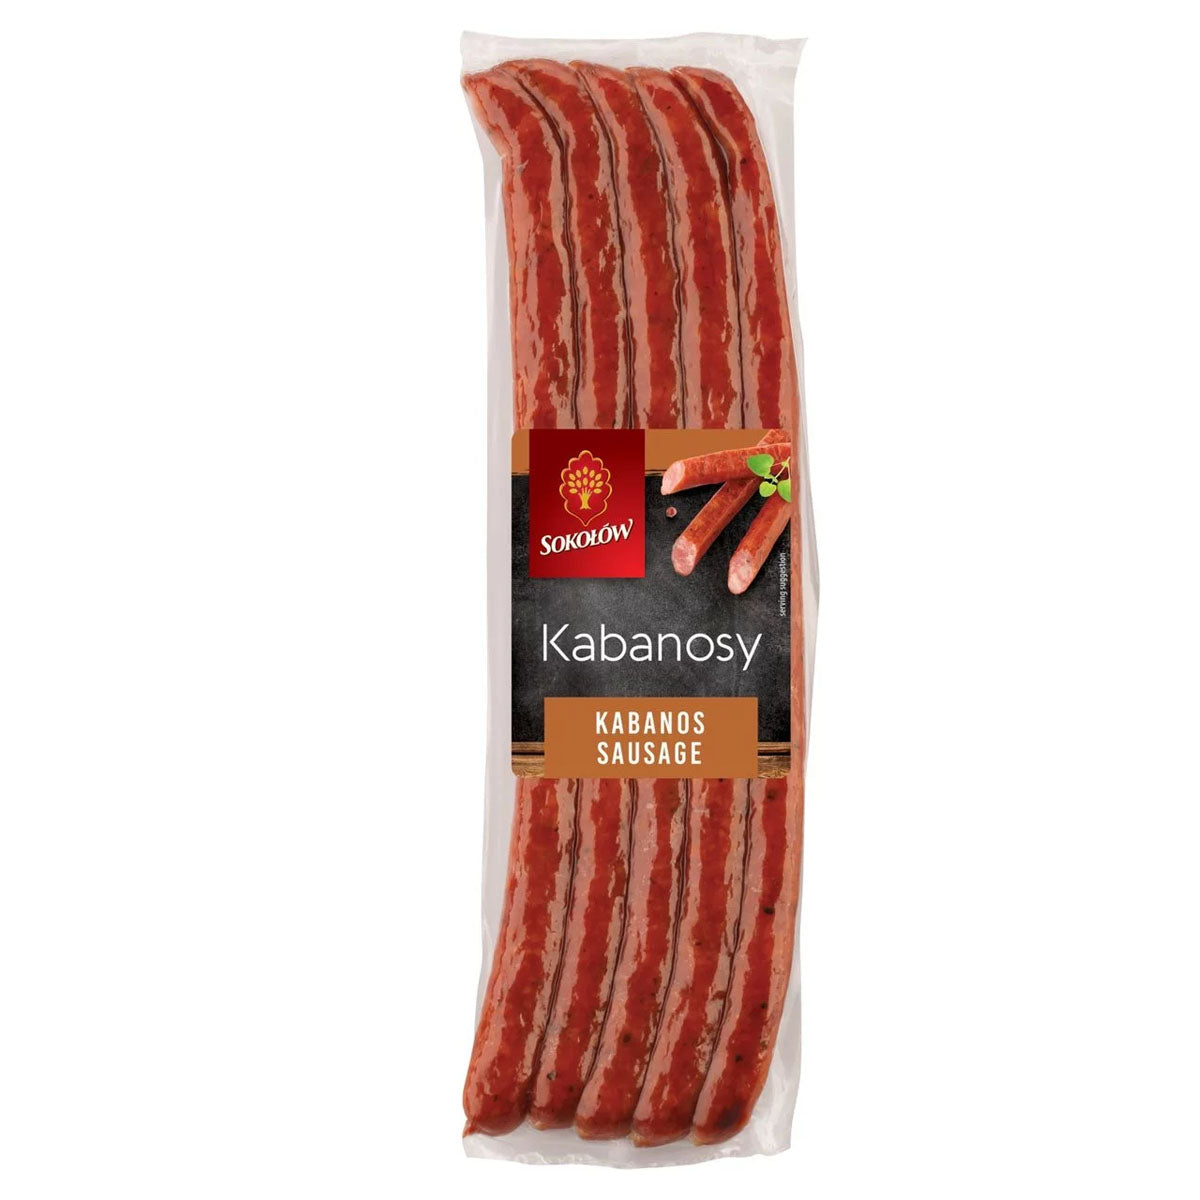 Sokolow - Kabanos Sausages - 250g - Continental Food Store